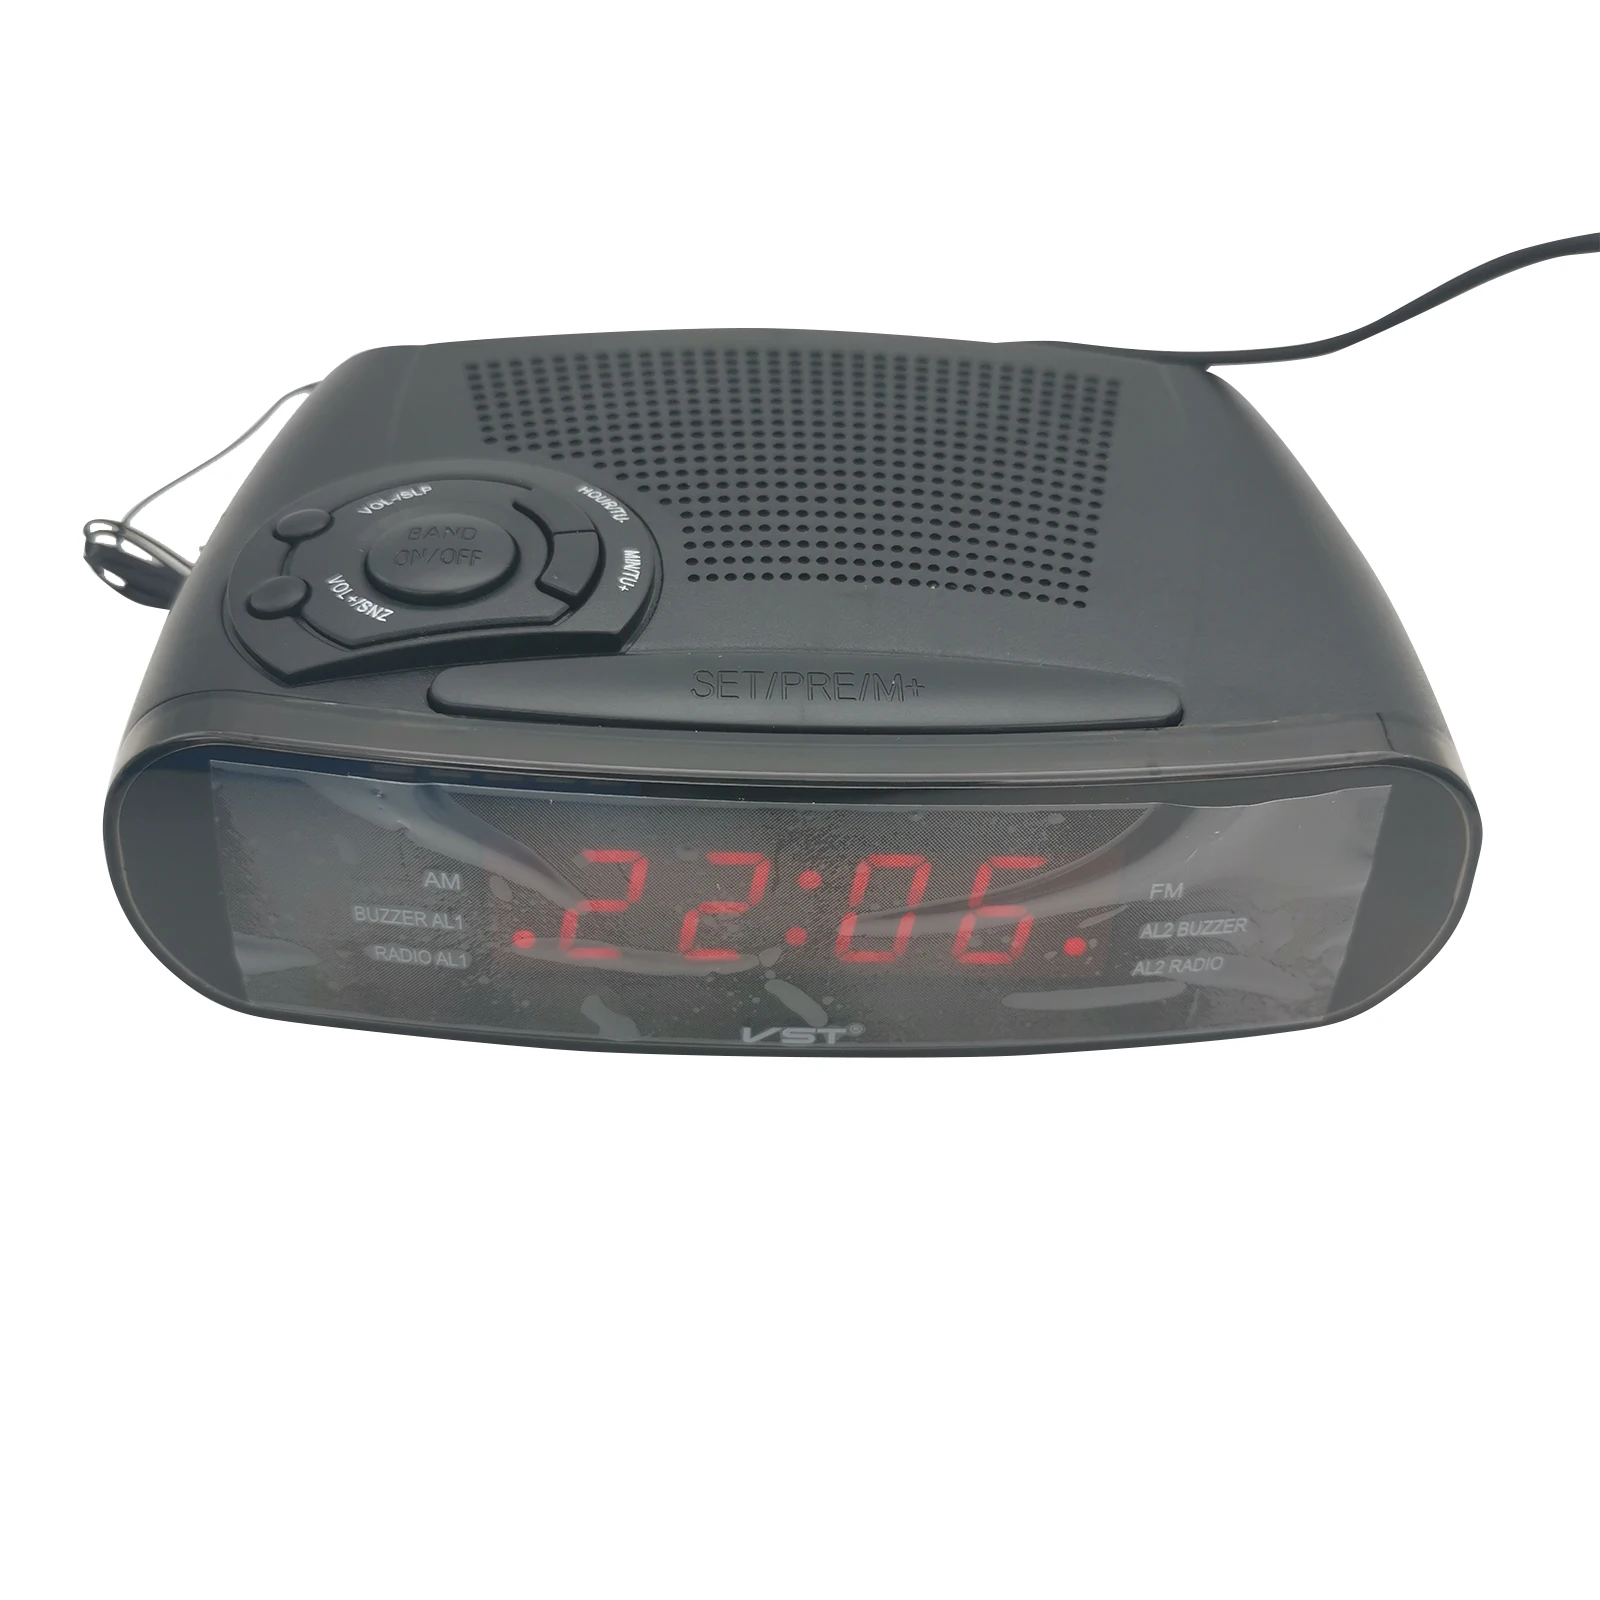 Digital Alarm Clock Radio Alarm Clocks for Bedrooms with AM/FM Radio Easy Snooze Battery Backup Red LED Digits